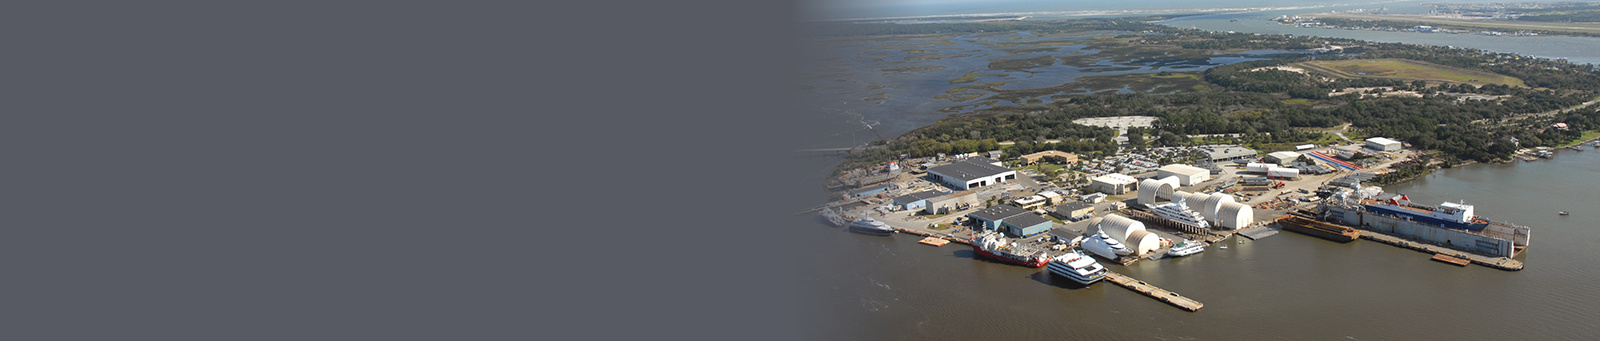 Aerial view of Jacksonville, FL Shipyard